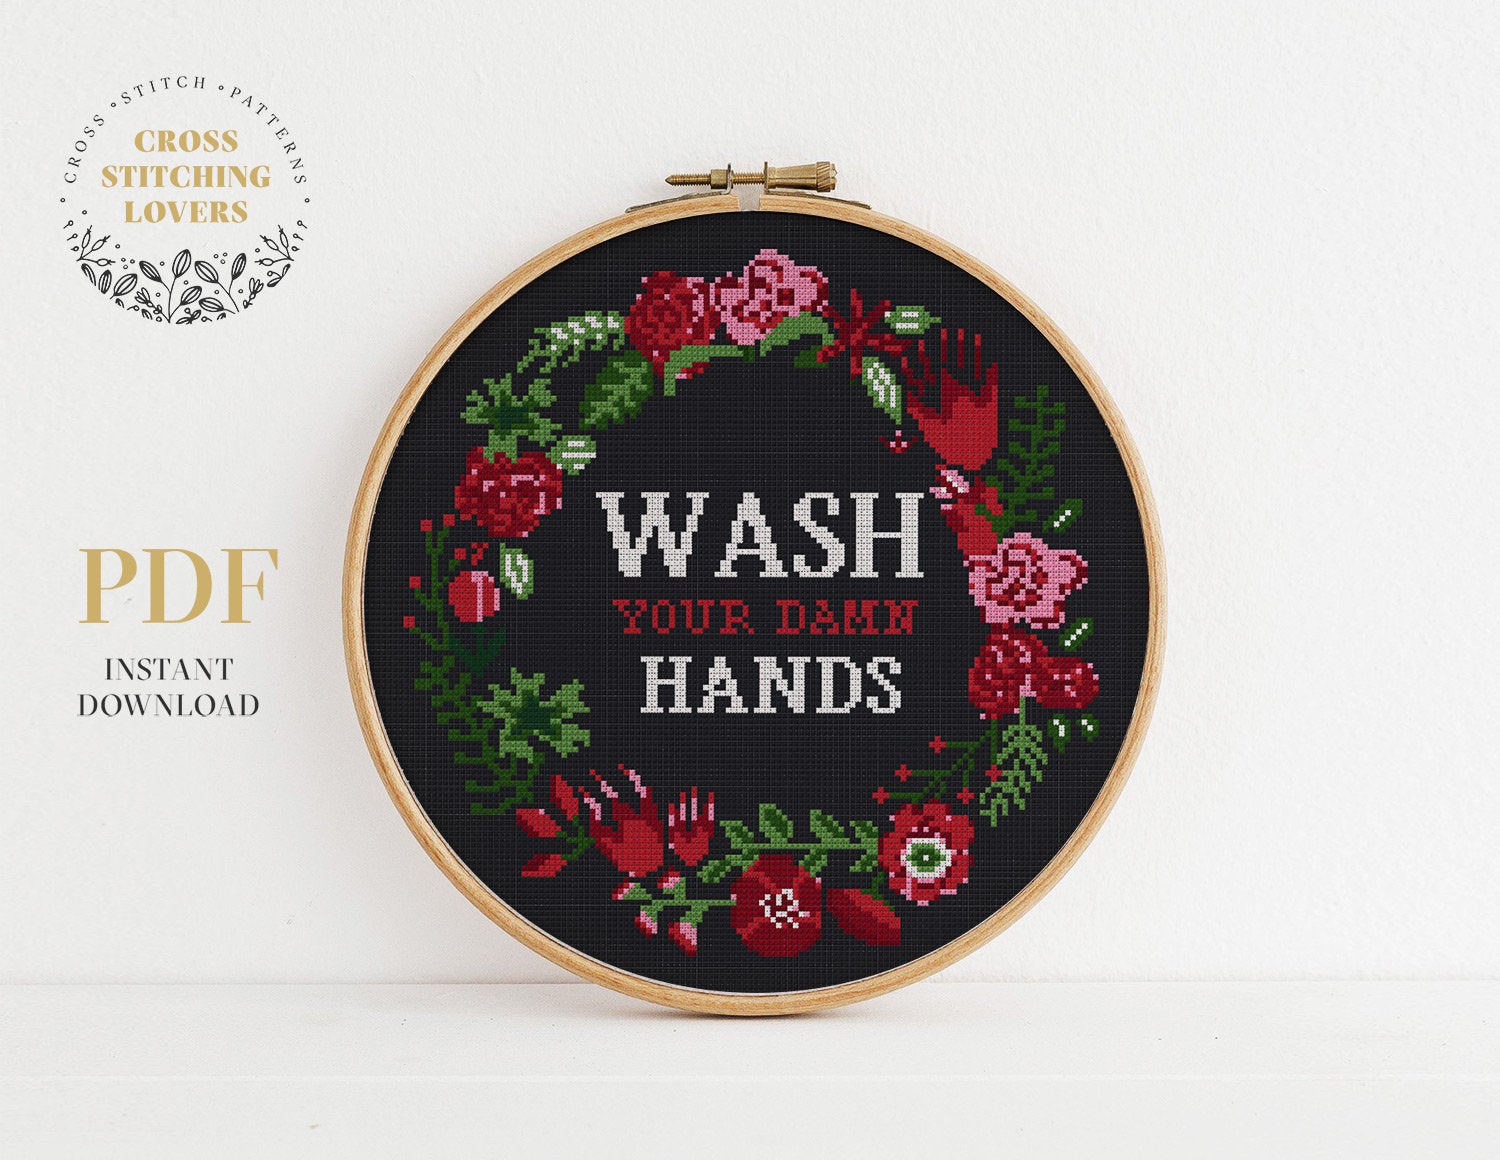 Wash your hands - Cross stitch pattern